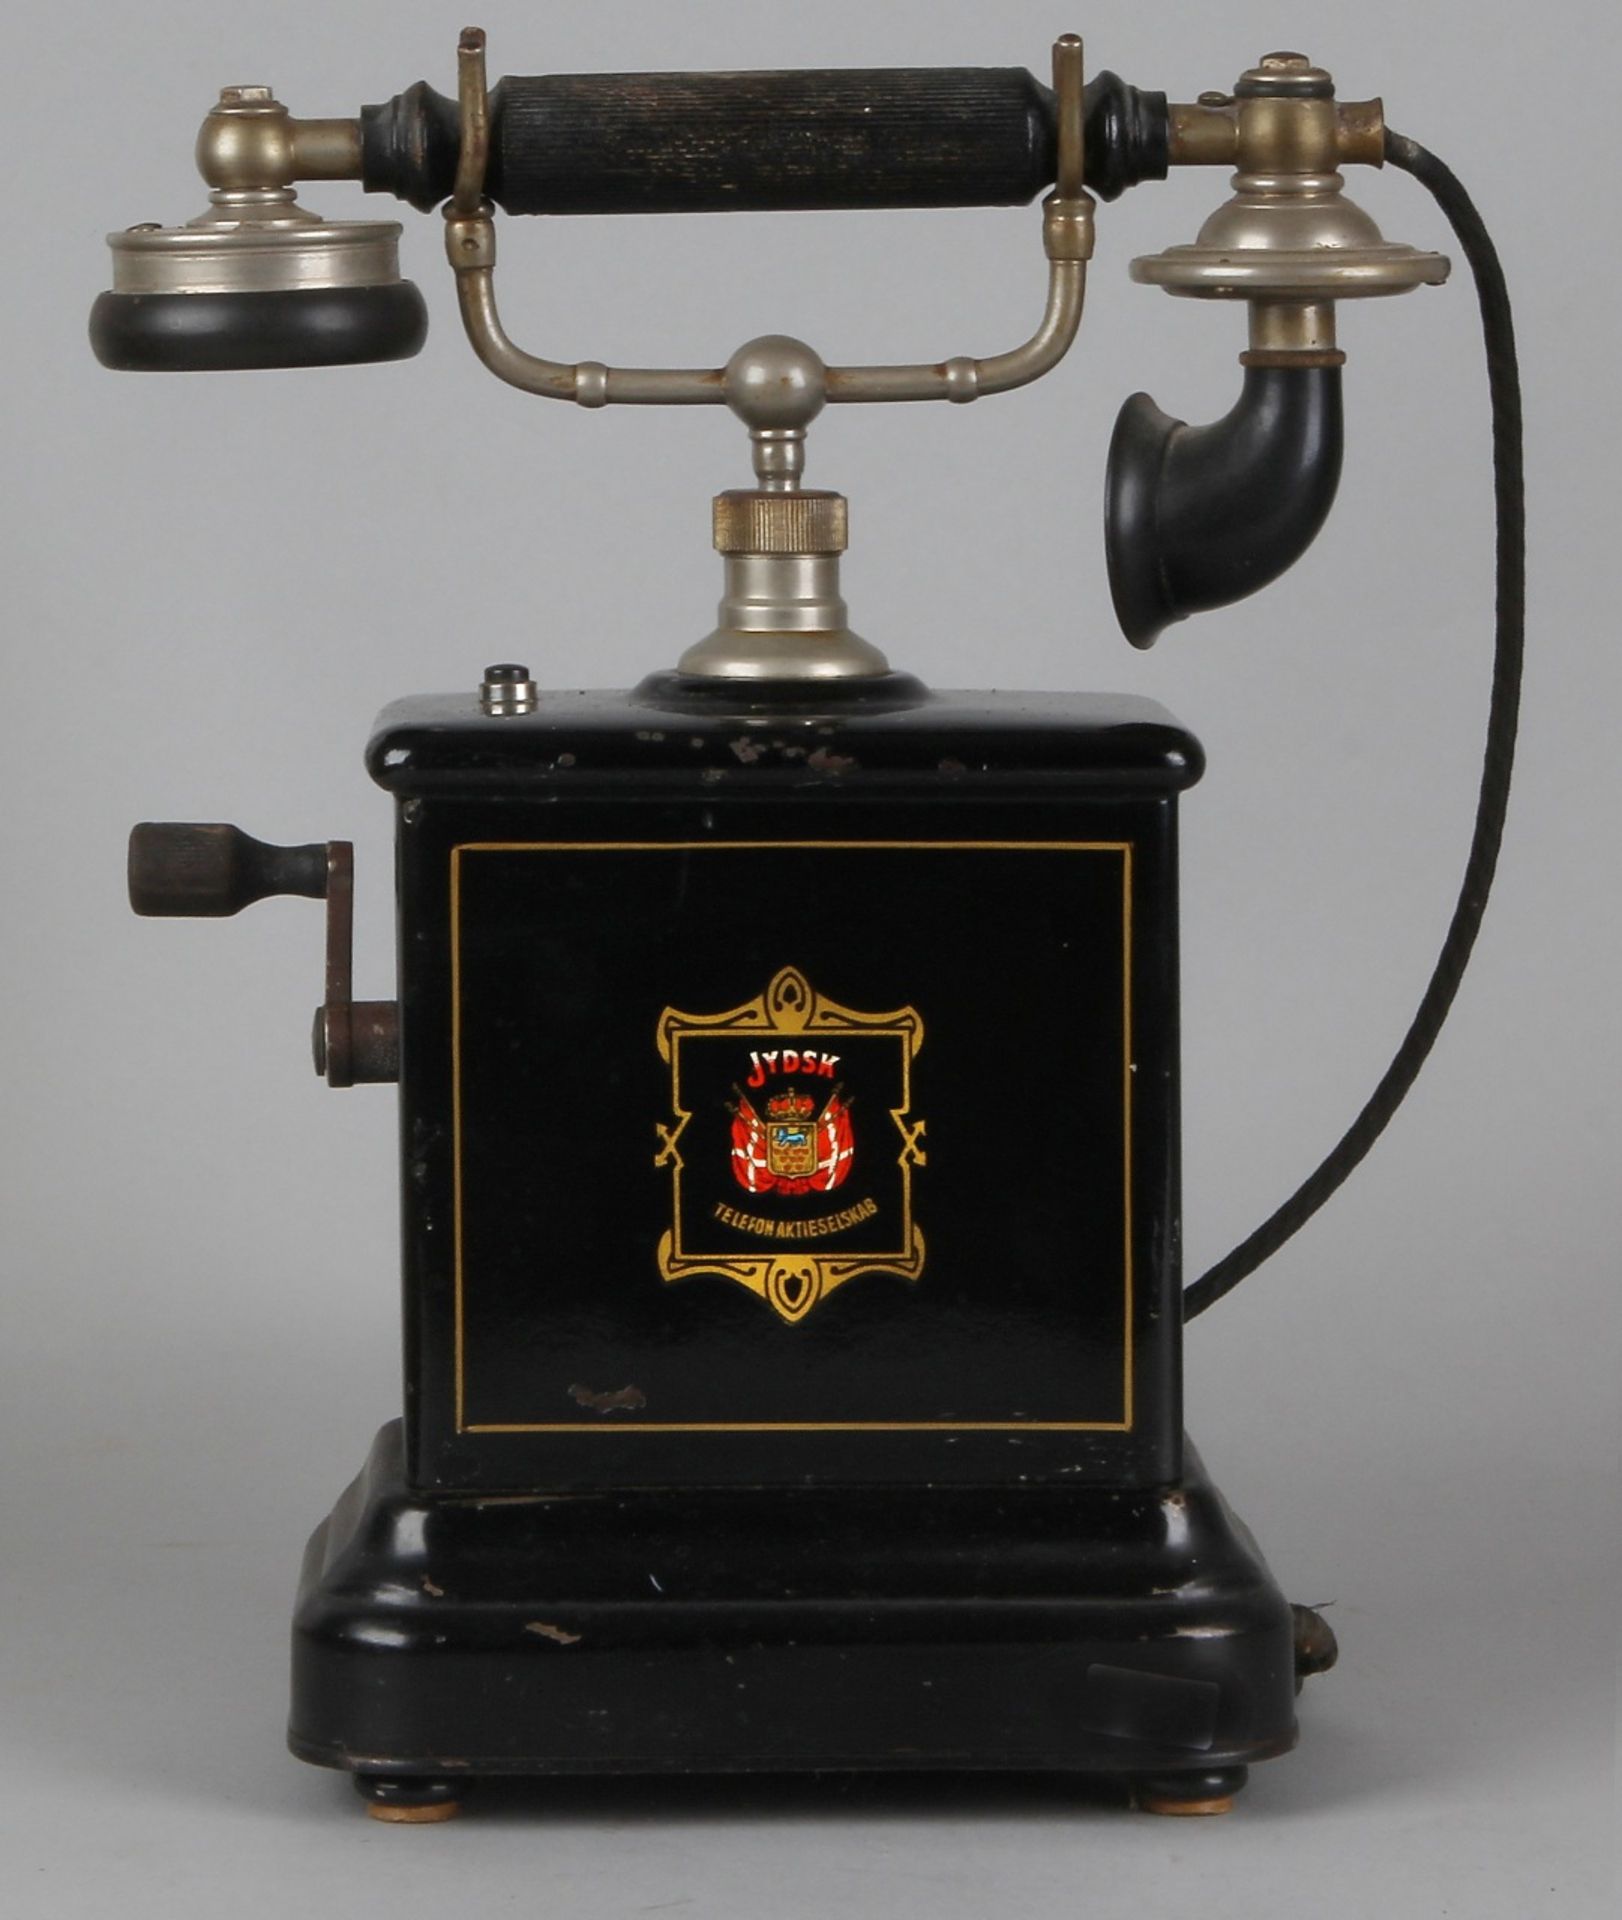 Prewar Danish phone JYDSK telefonaktieselskab, metal baceliet, in good condition 32x25x12cm.